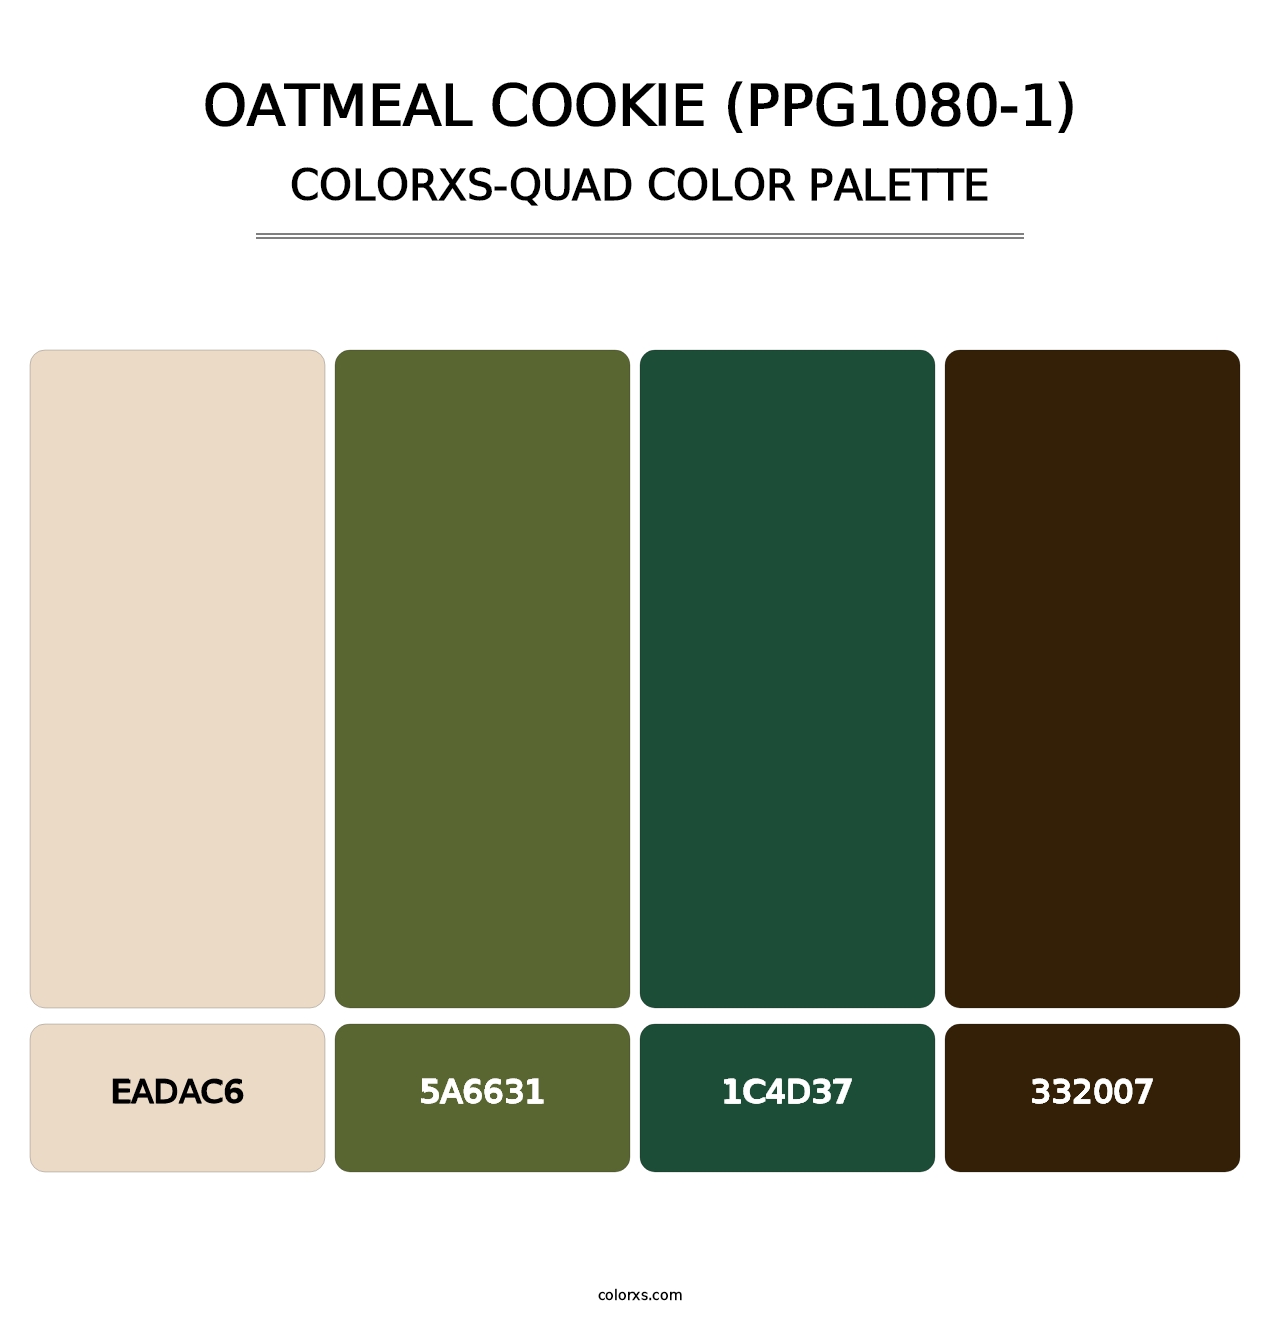 Oatmeal Cookie (PPG1080-1) - Colorxs Quad Palette